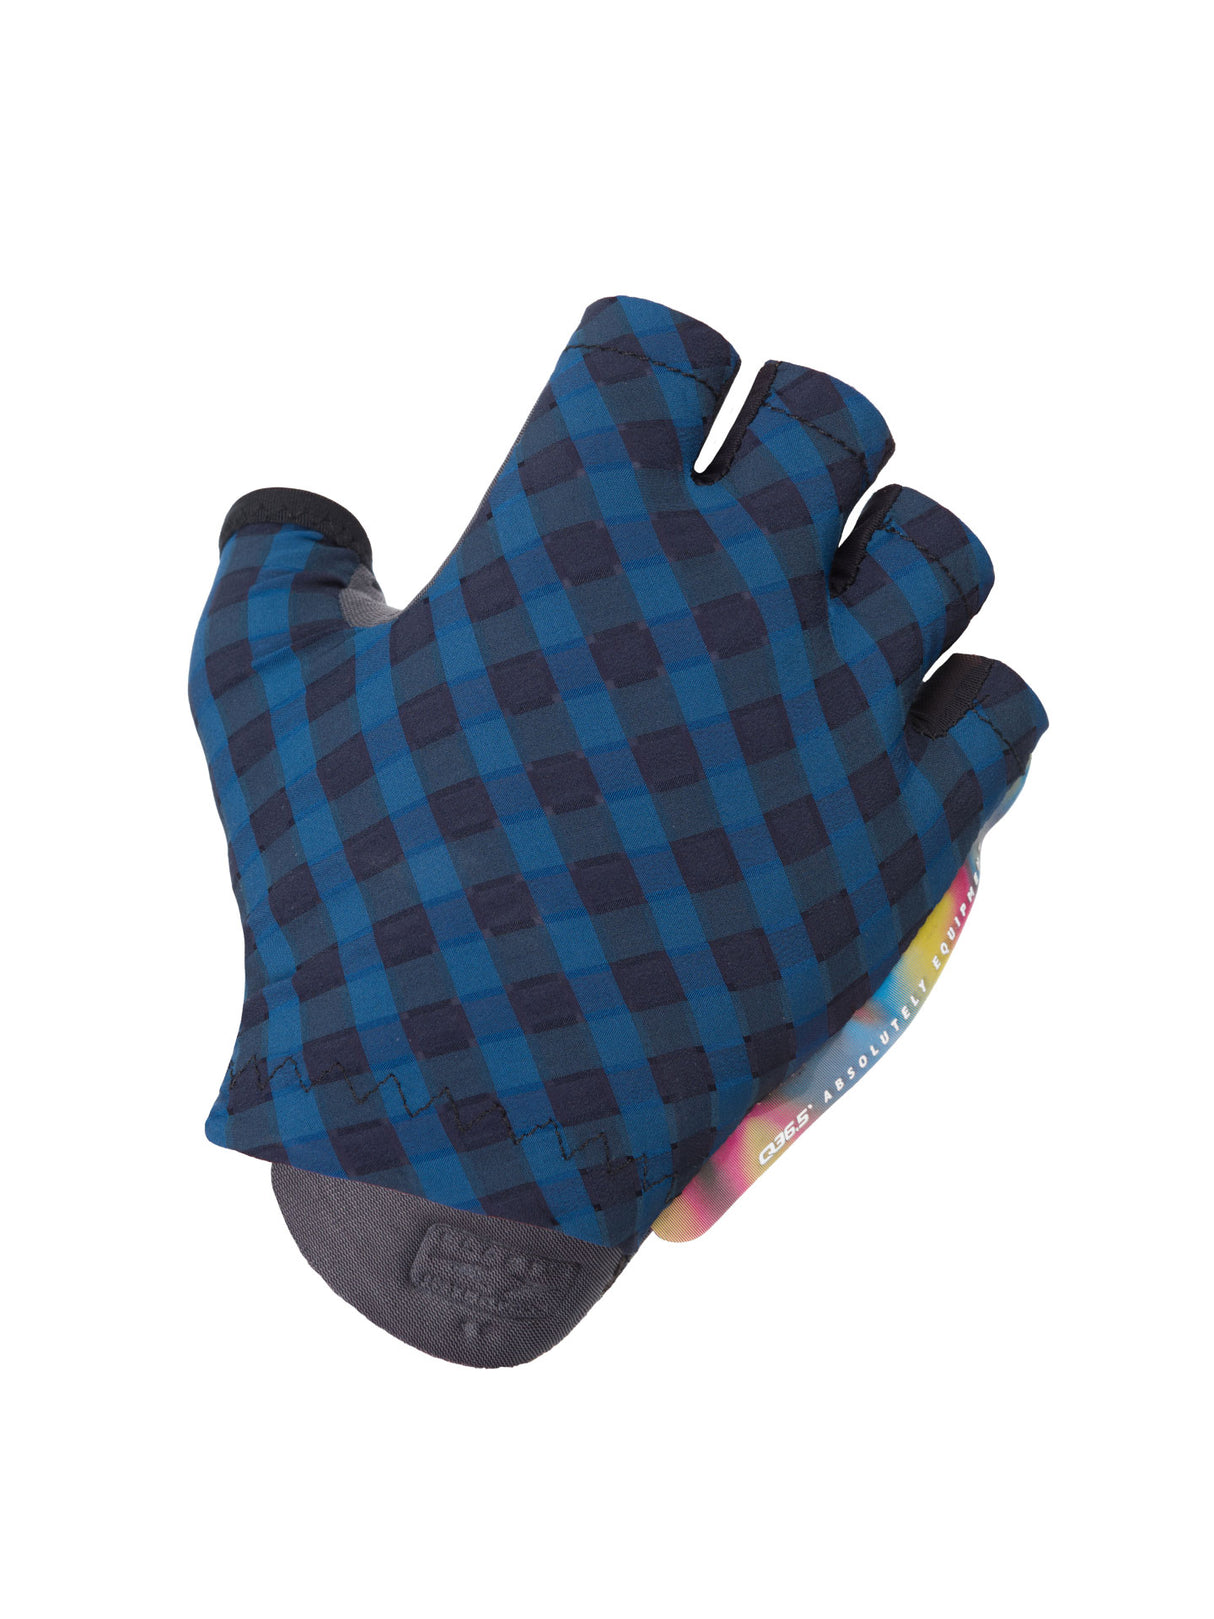 Q36.5 Unique Summer Clima Gloves